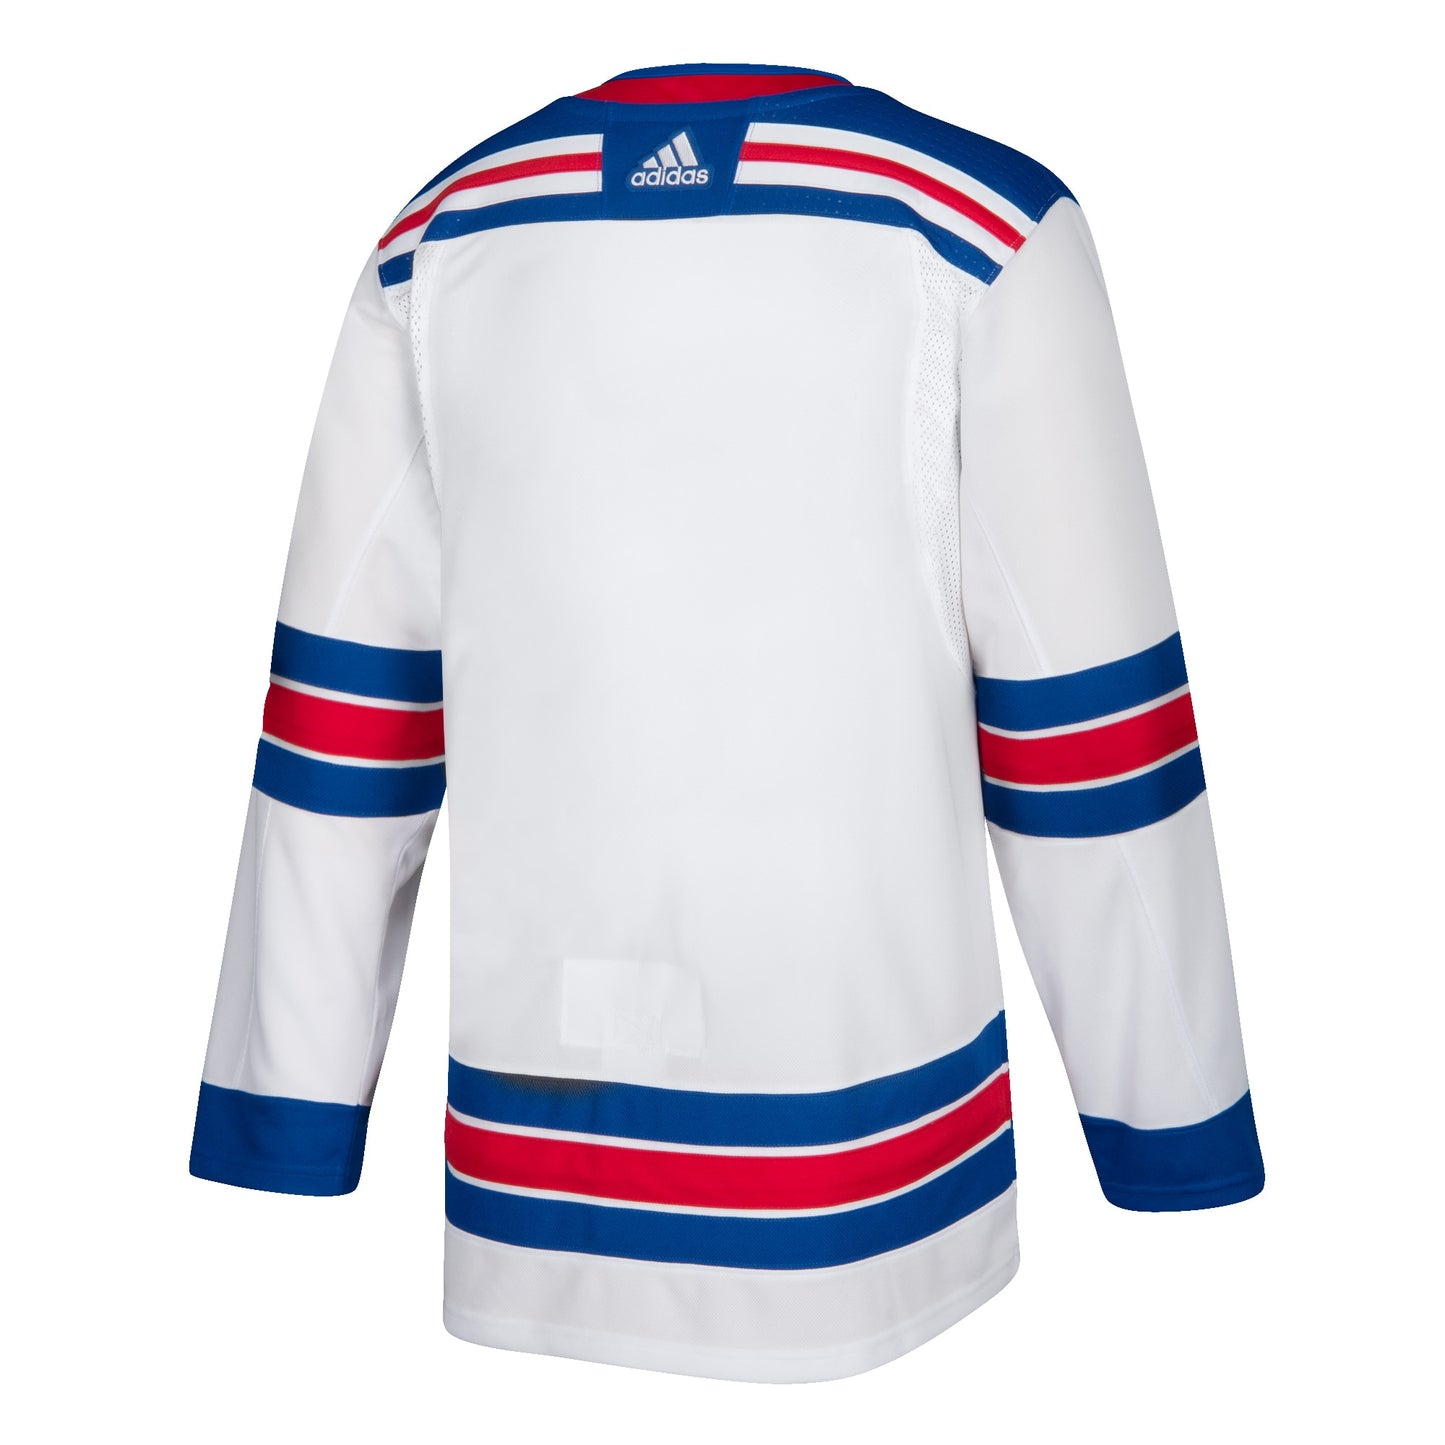 New York Rangers adidas Away Authentic Blank Jersey - White